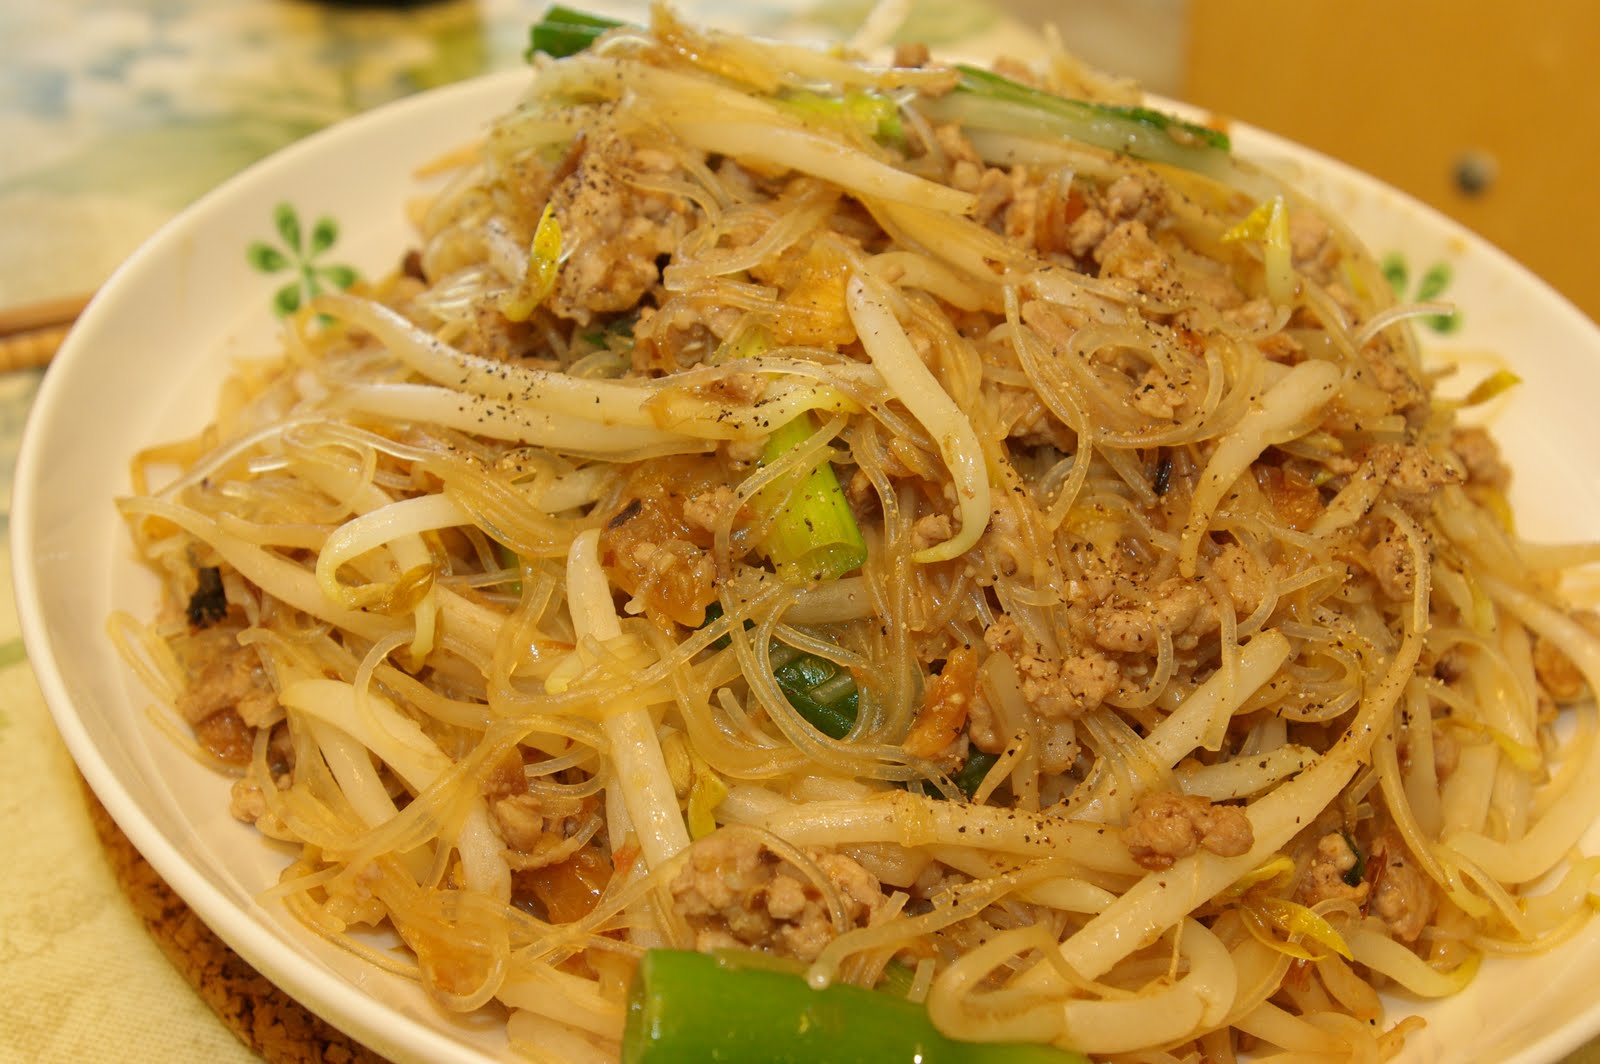 Susan's wonderful world: Stir-fried rice noodles 炒米粉